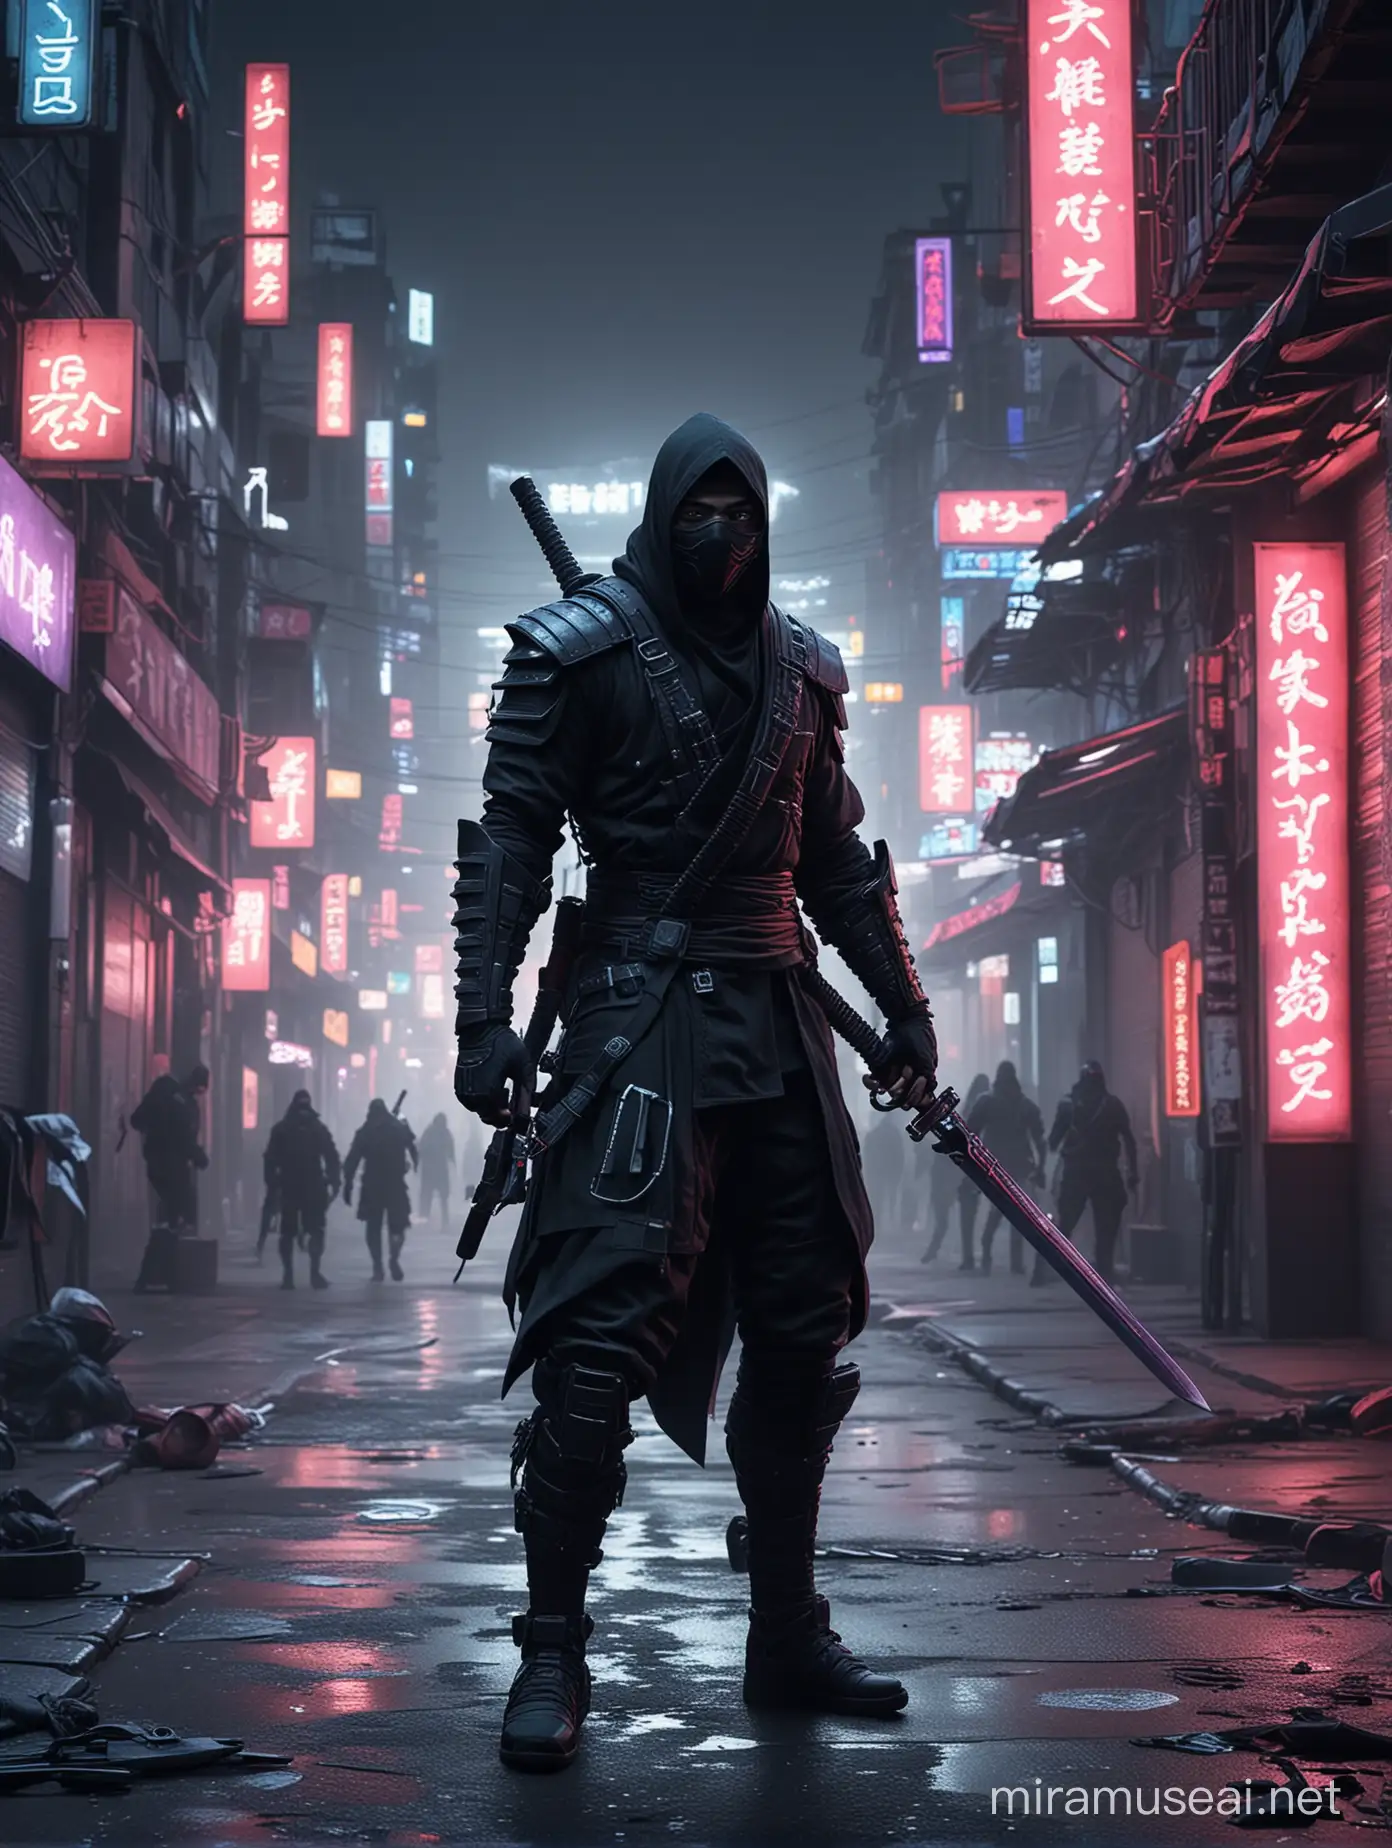 Cyberpunk Ninja Duel Amidst NeonLit Streets